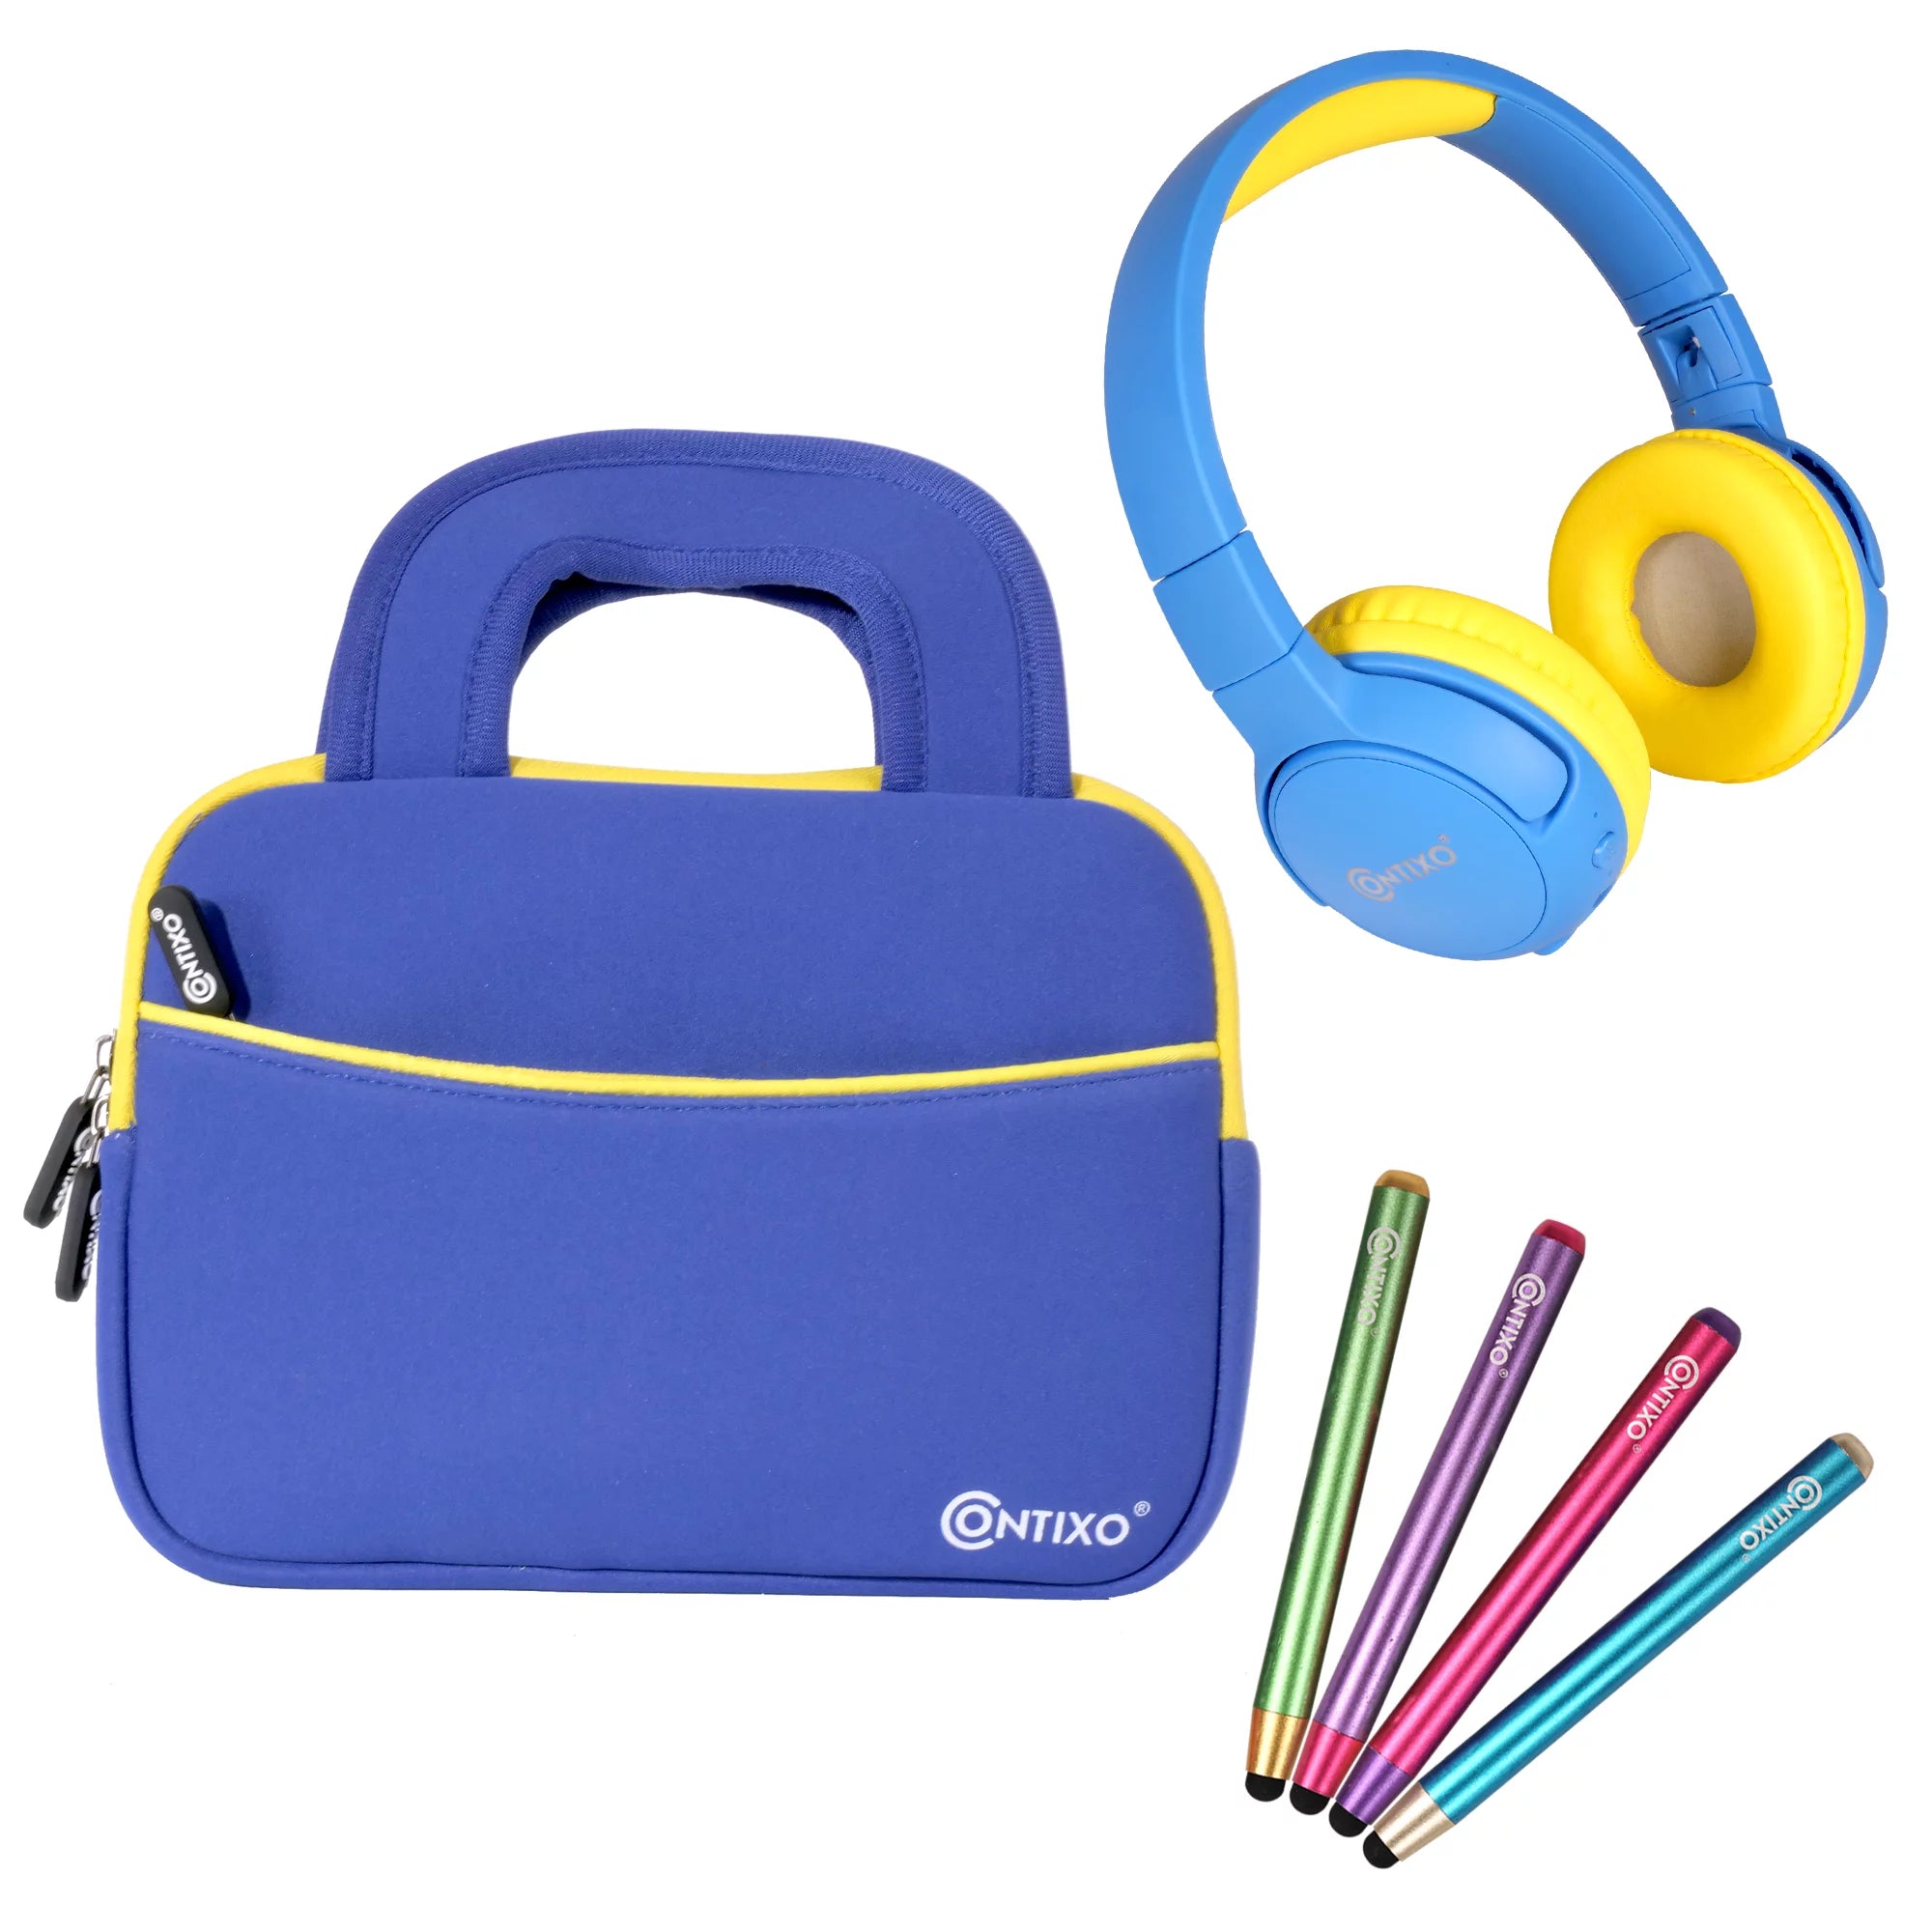 Contixo Kids Tablet Bundle - Bluetooth Headphones, 4 Stylu